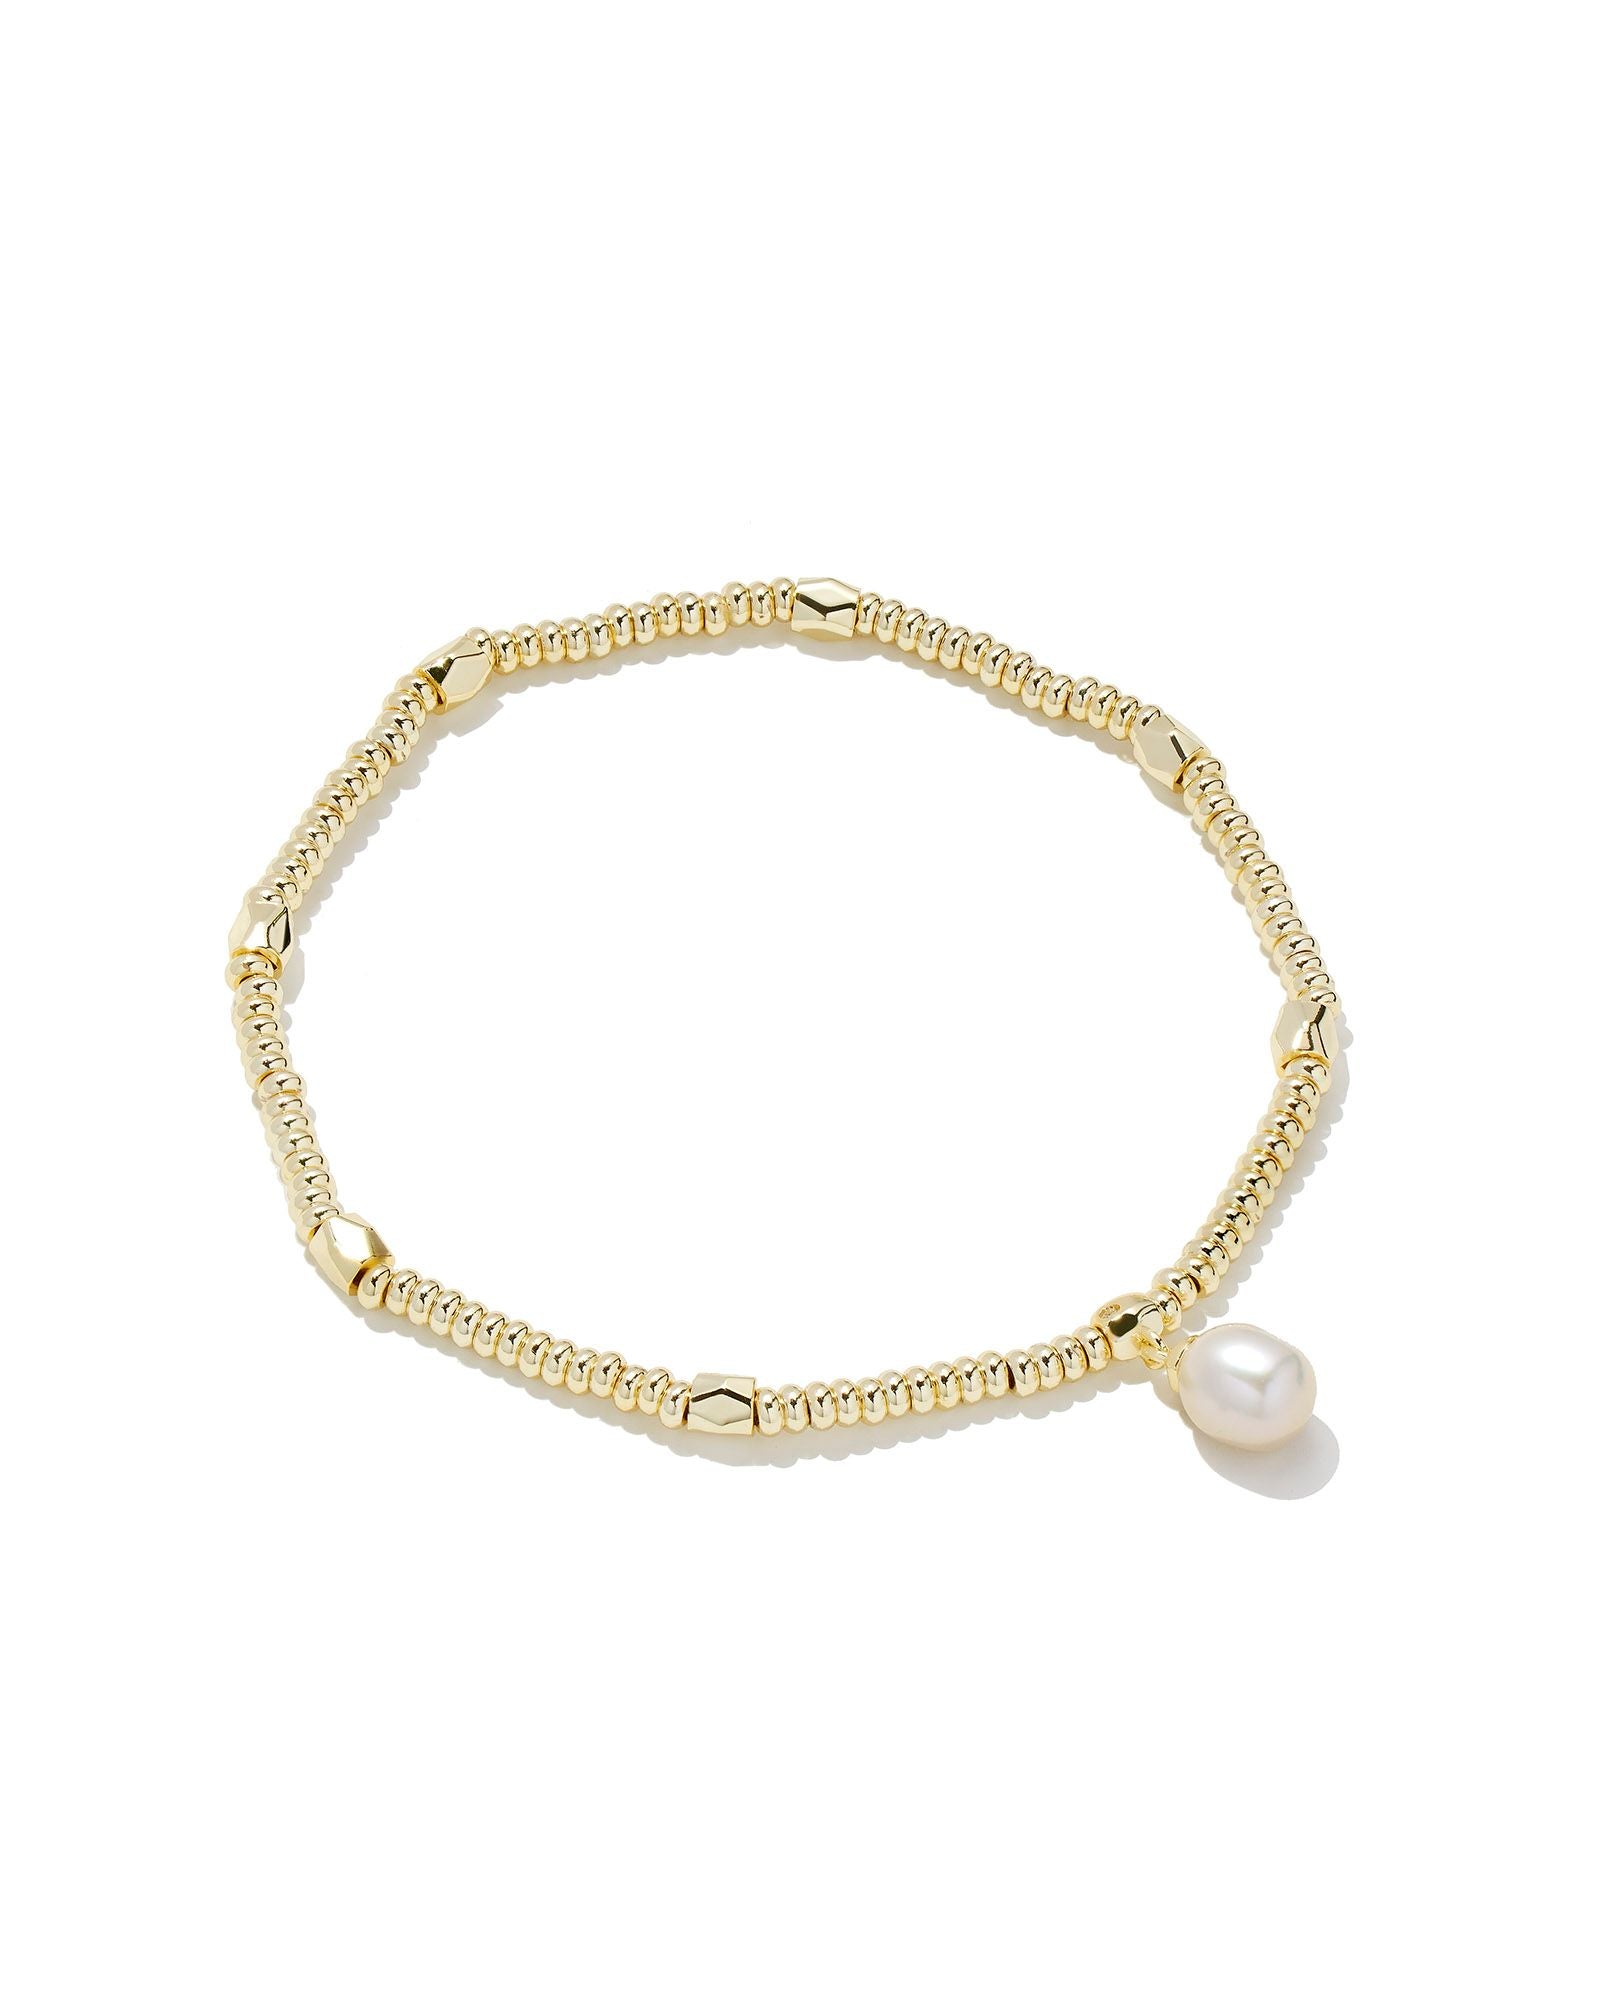 Lindsay Stretch Bracelet White Pearl Gold or Silver